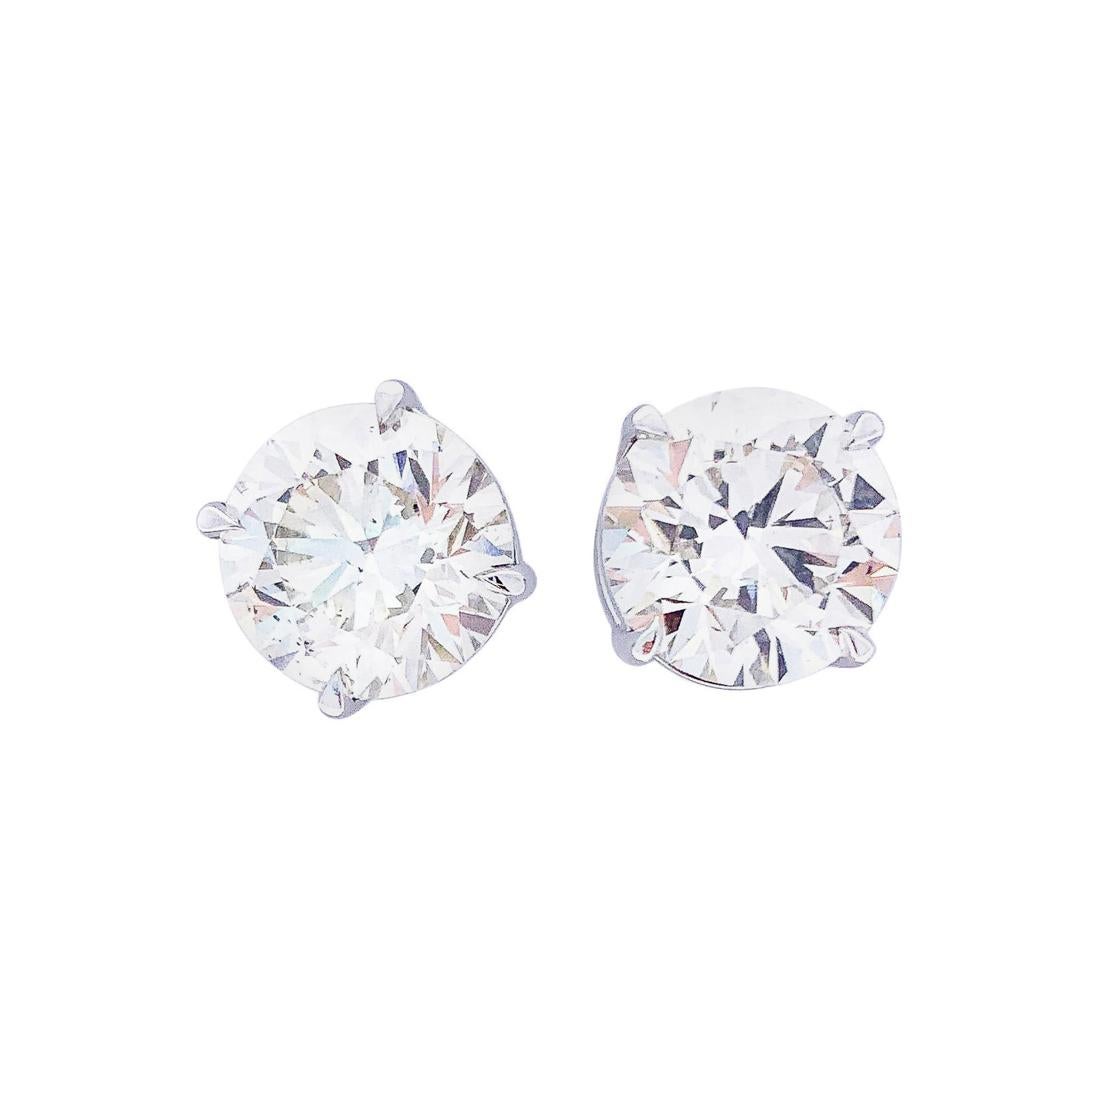 EGL USA Certified 10.17 Carat Total Diamond Stud Earrings in 14 Karat White Gold